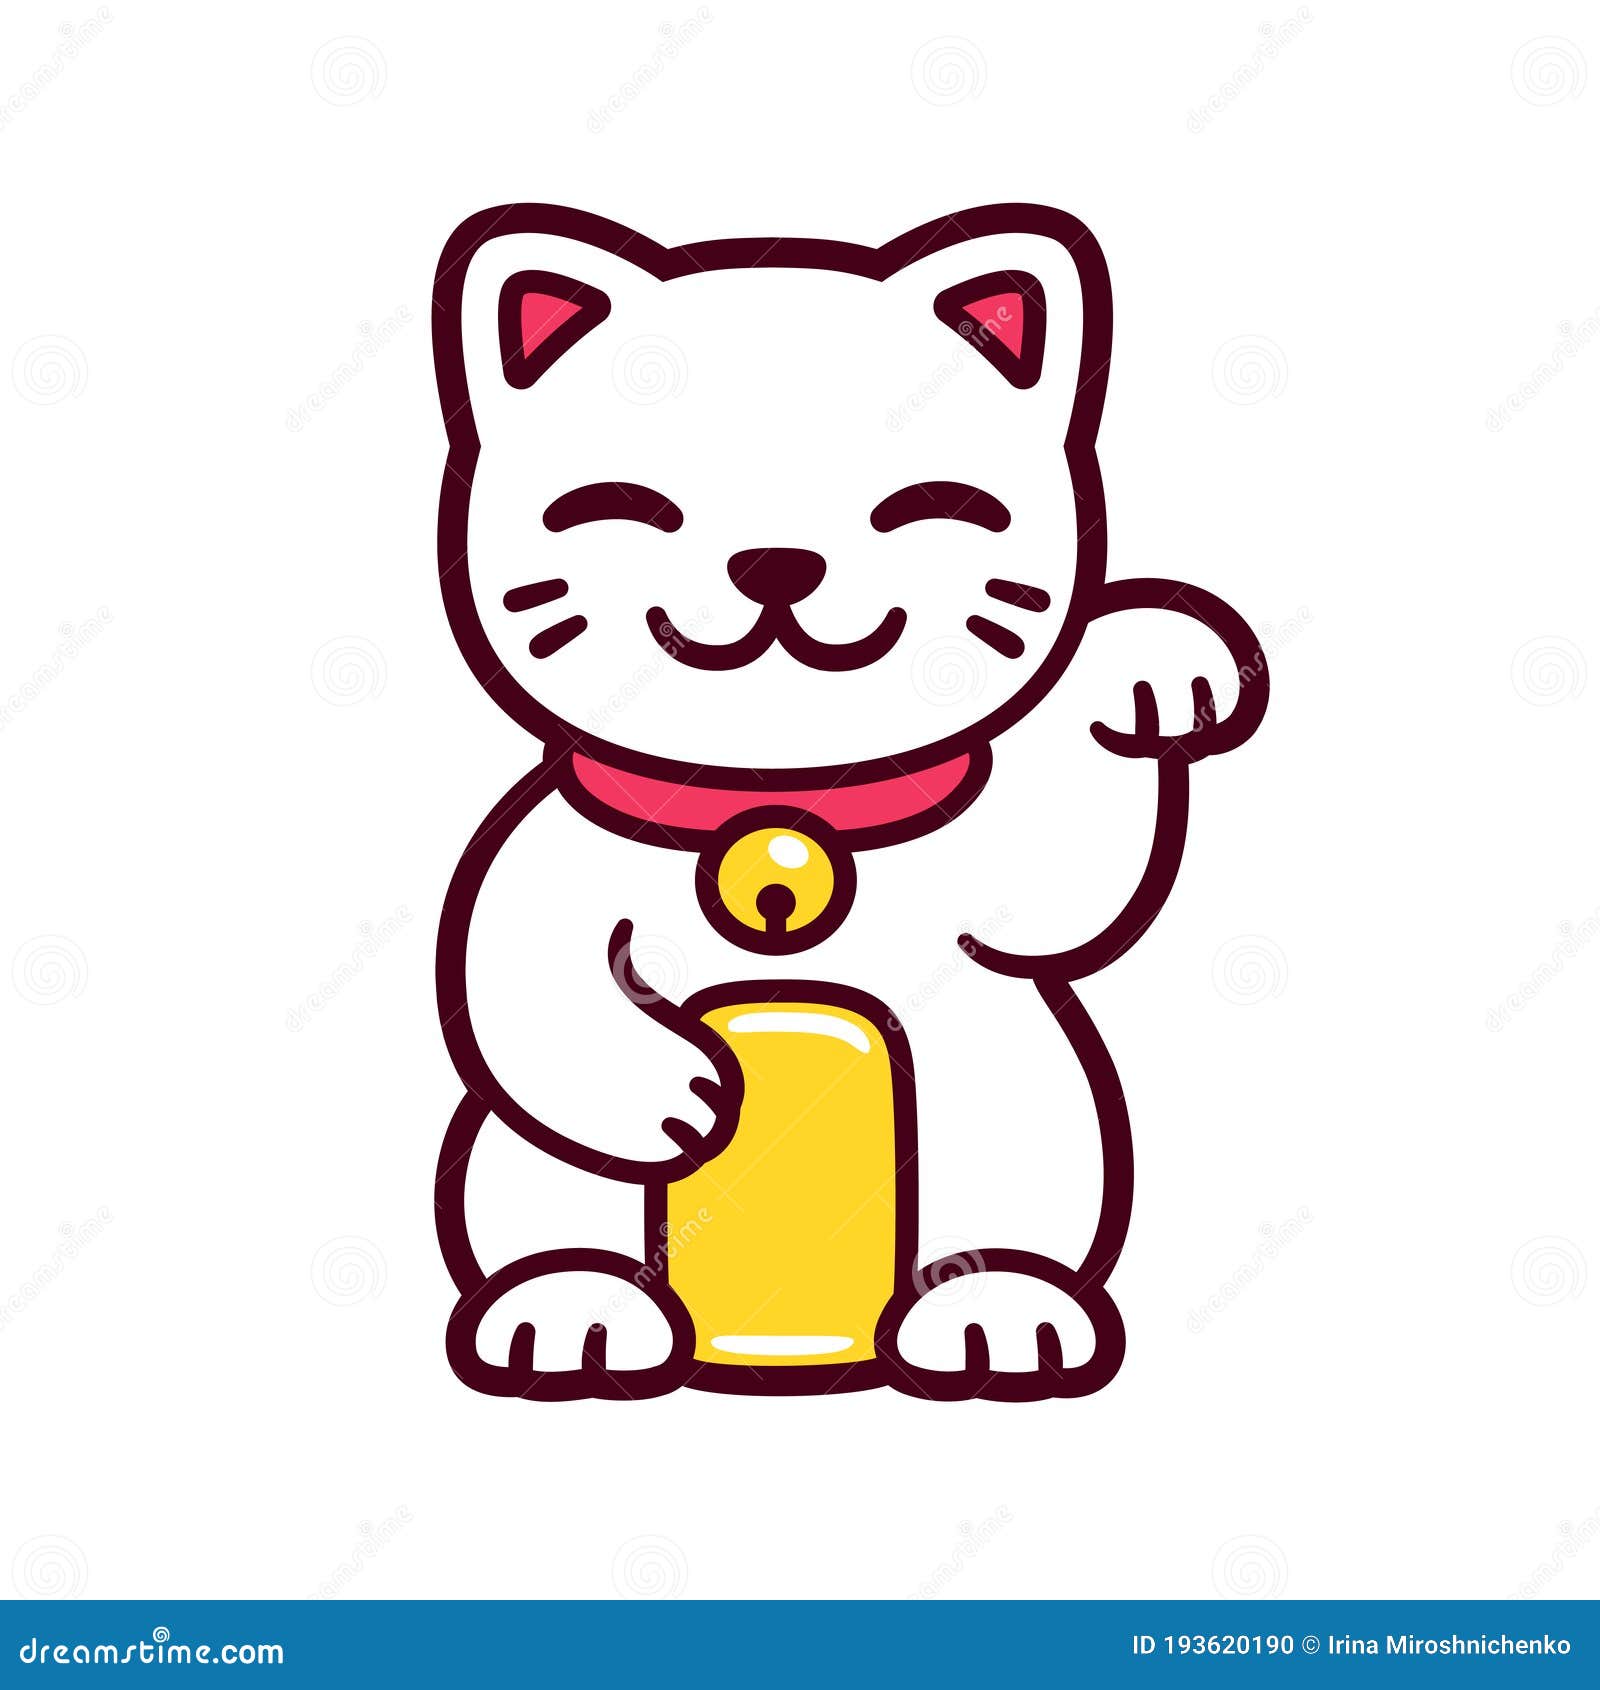 Cute Cartoon Maneki Neko Cat Vector Illustration | CartoonDealer.com ...